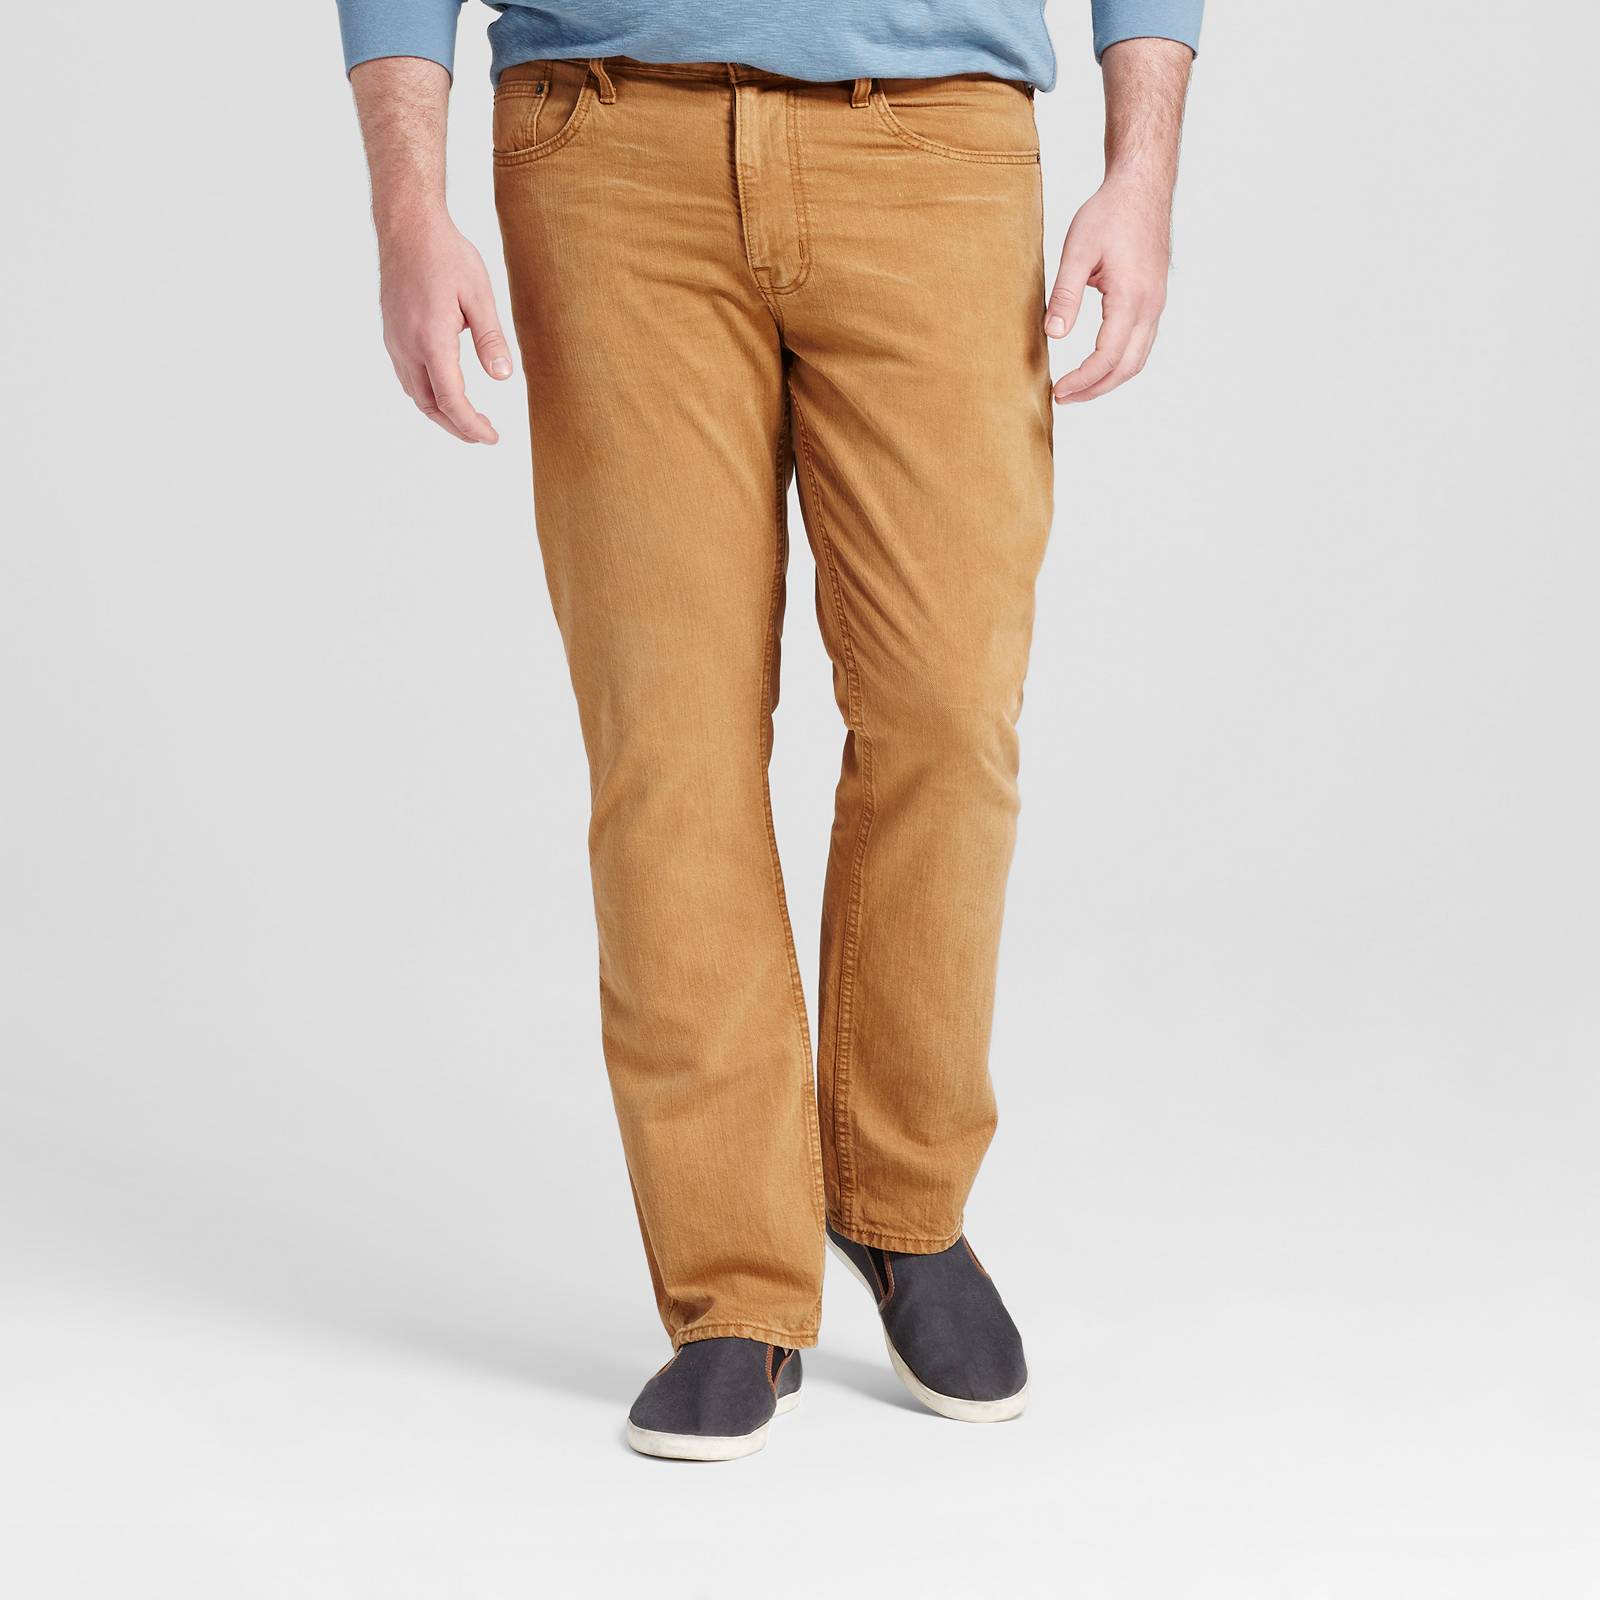 Men's Big & Tall Straight Fit Jeans Khaki - Mossimo Supply Co.™ | eBay